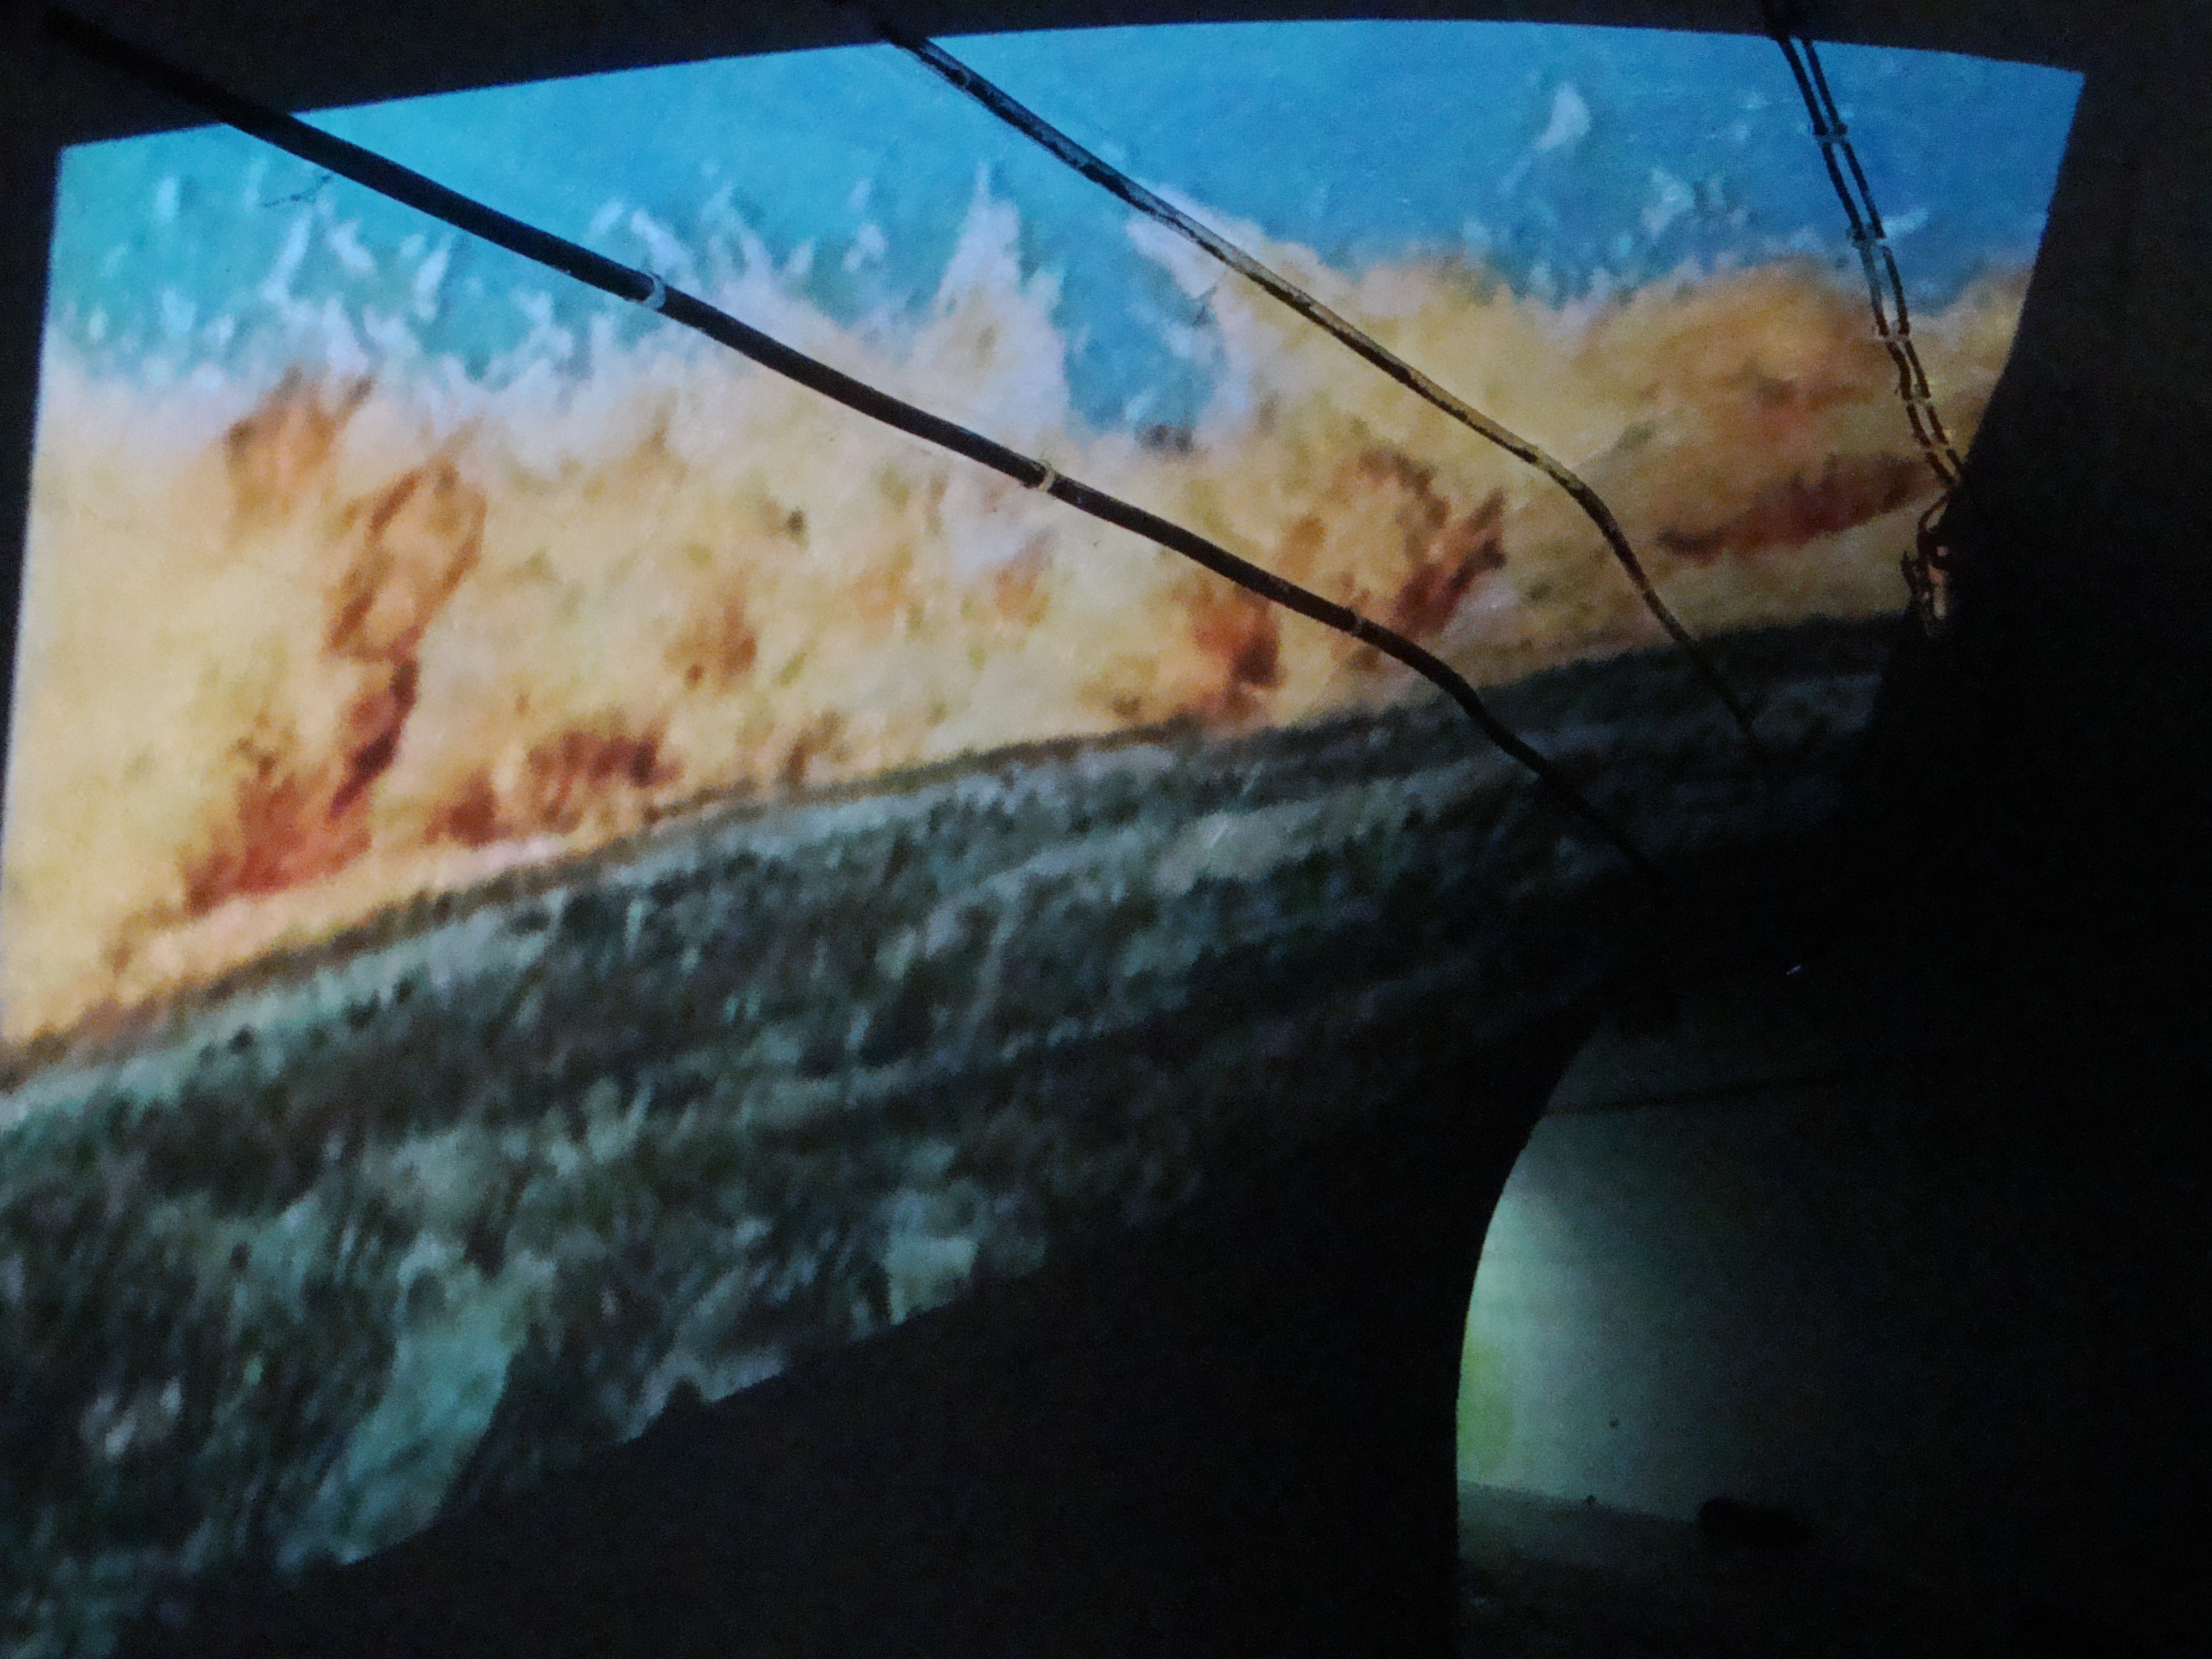 Sz.Berlin live video projection in entrance tunnel 2